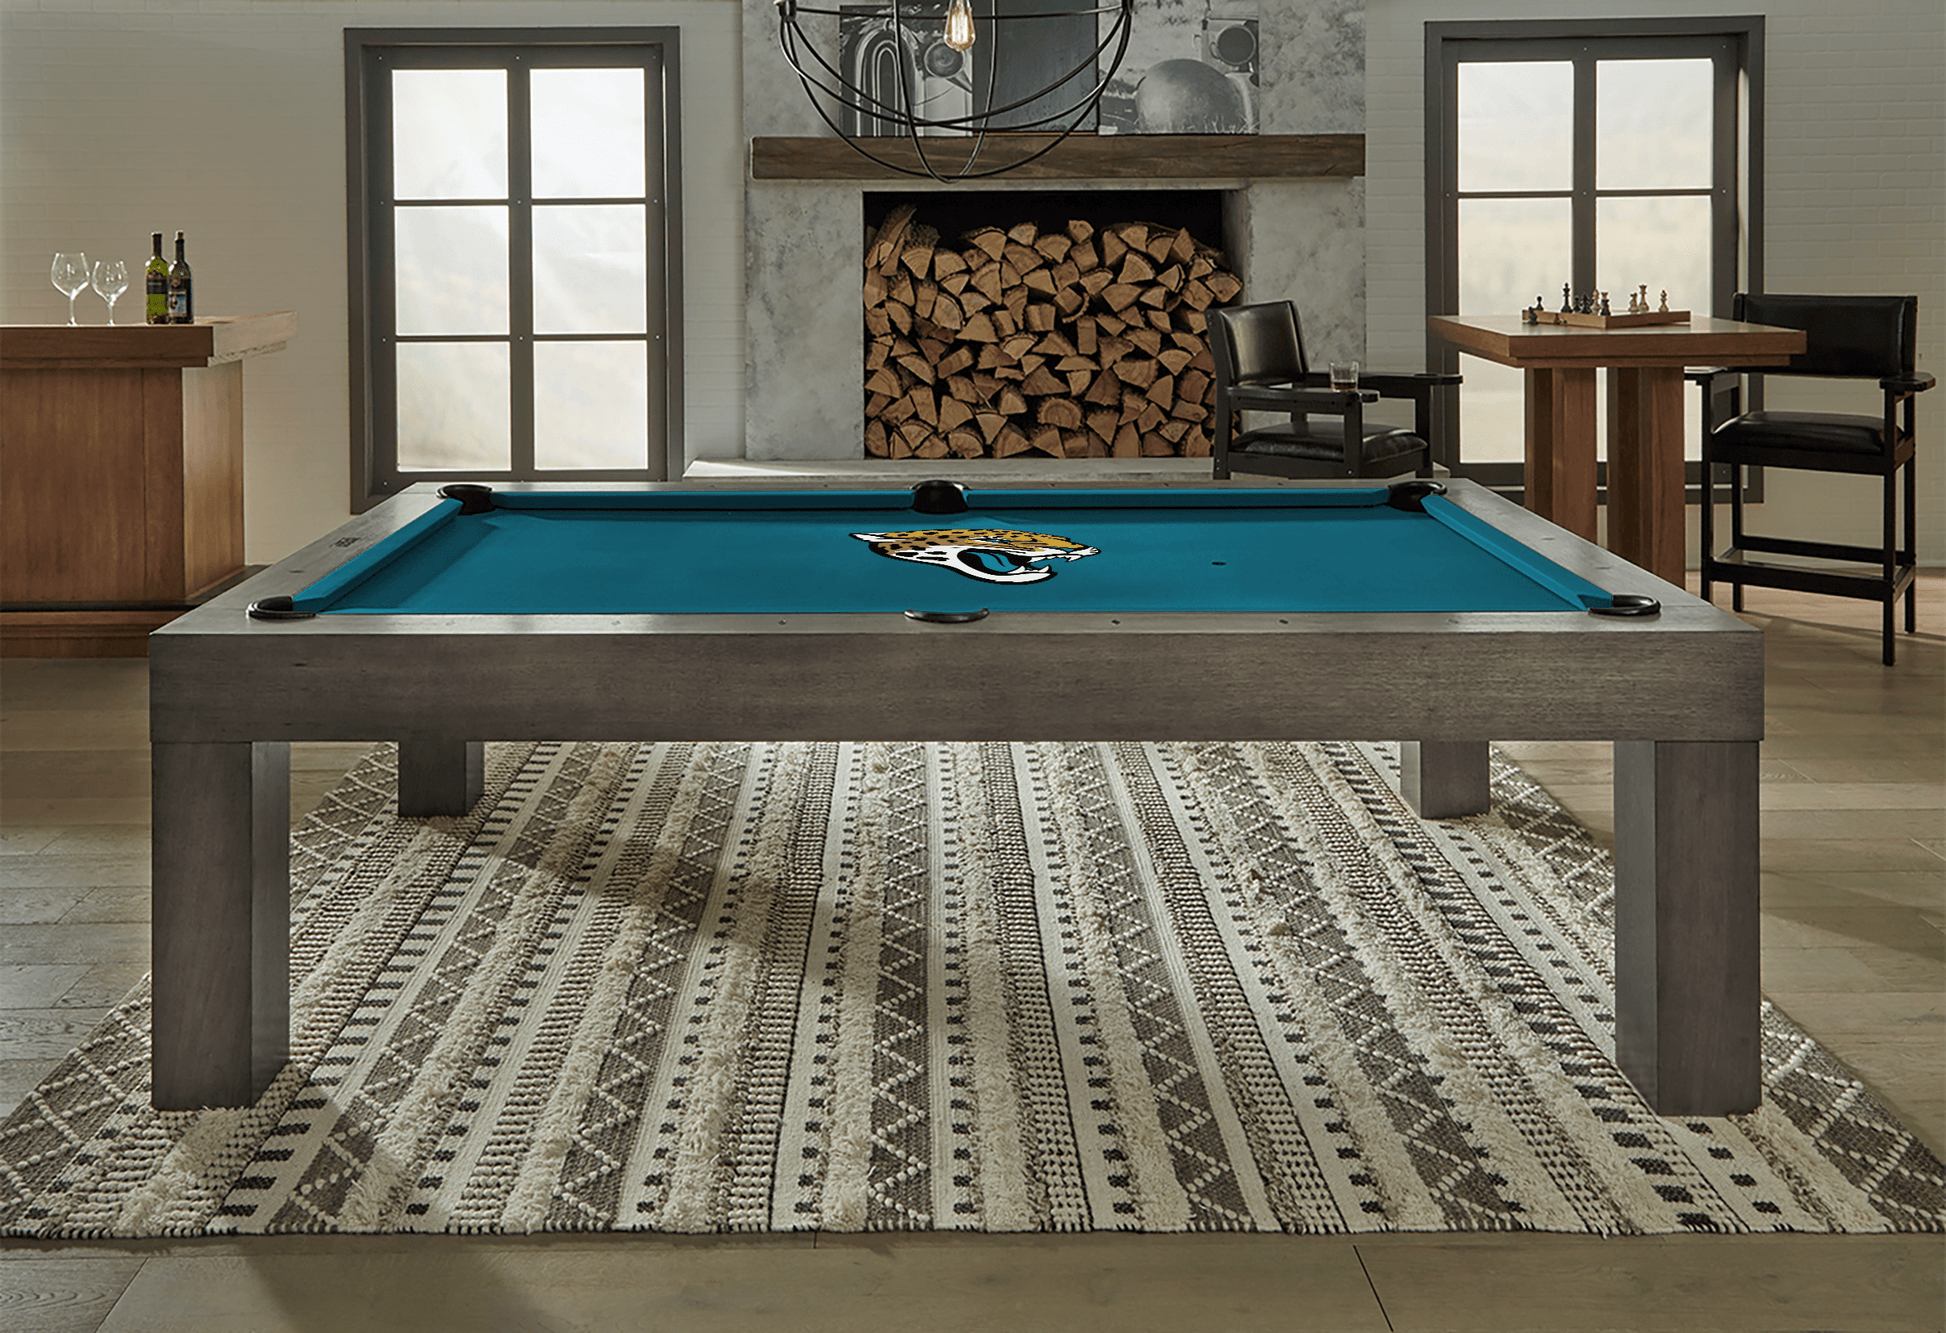 Jacksonville Jaguars Premium Pool Table Bundle - Charcoal Pool Bundle Home Arcade Games   